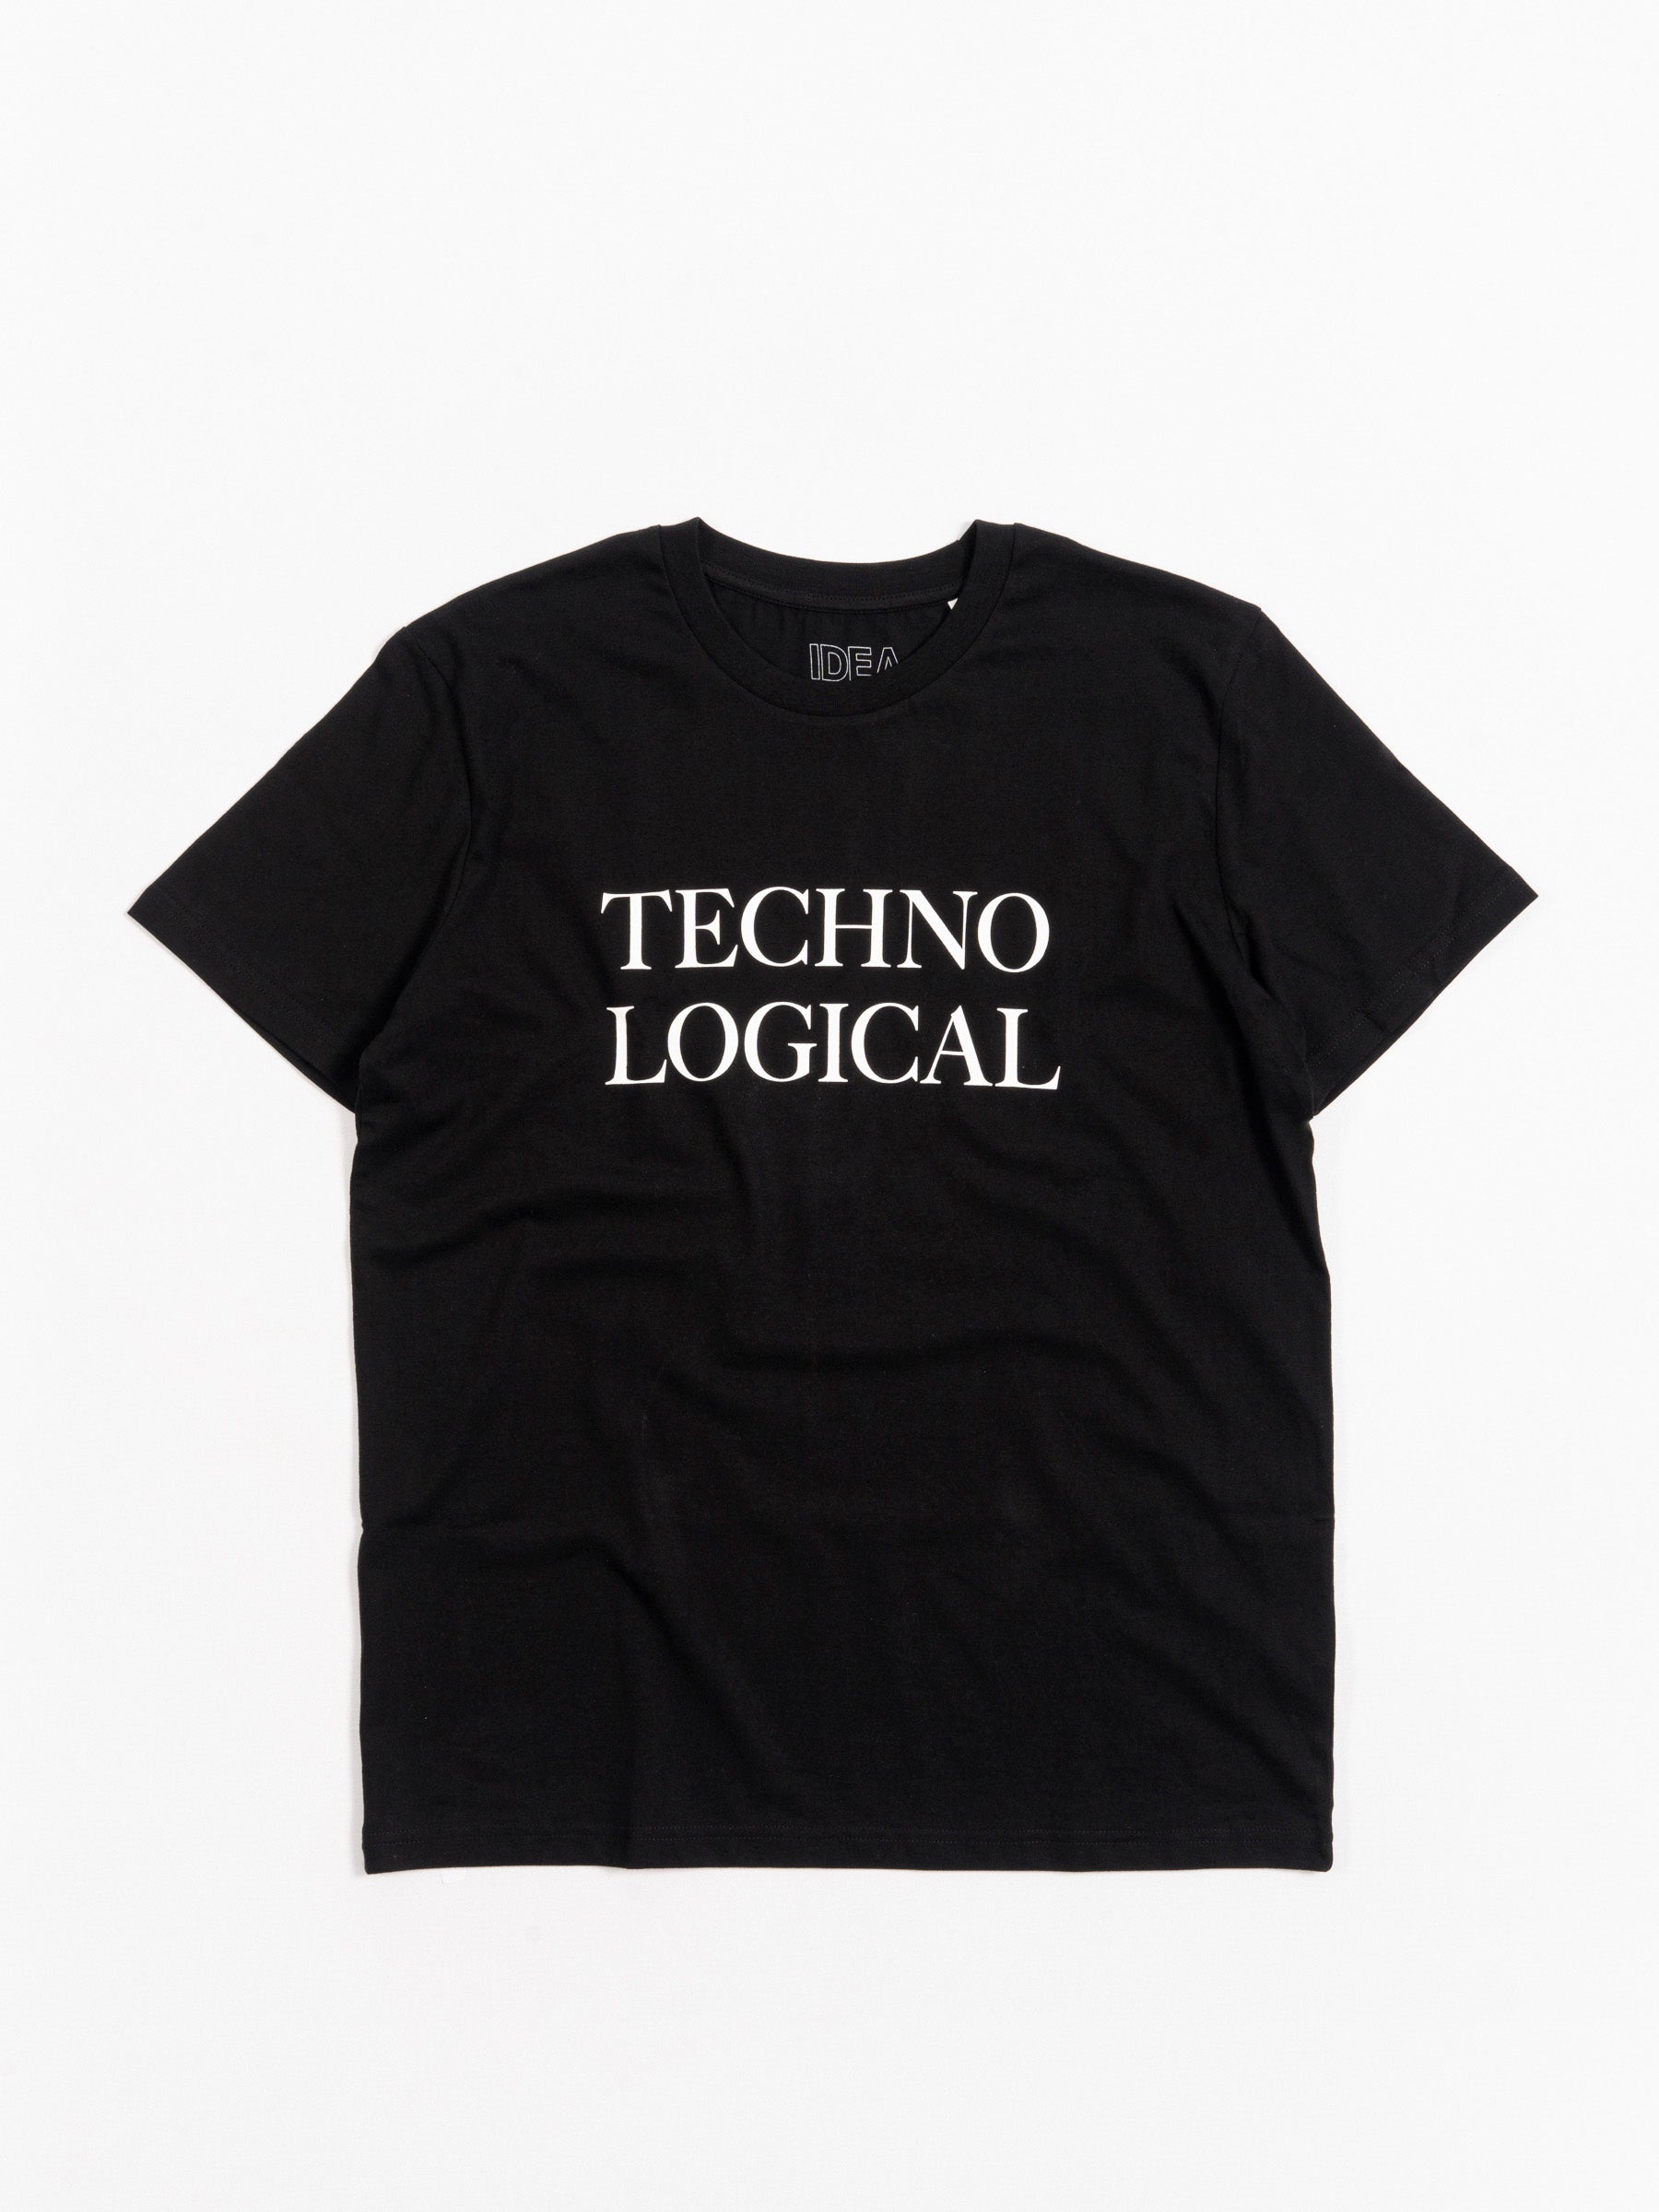 Techno Logical Tee Black